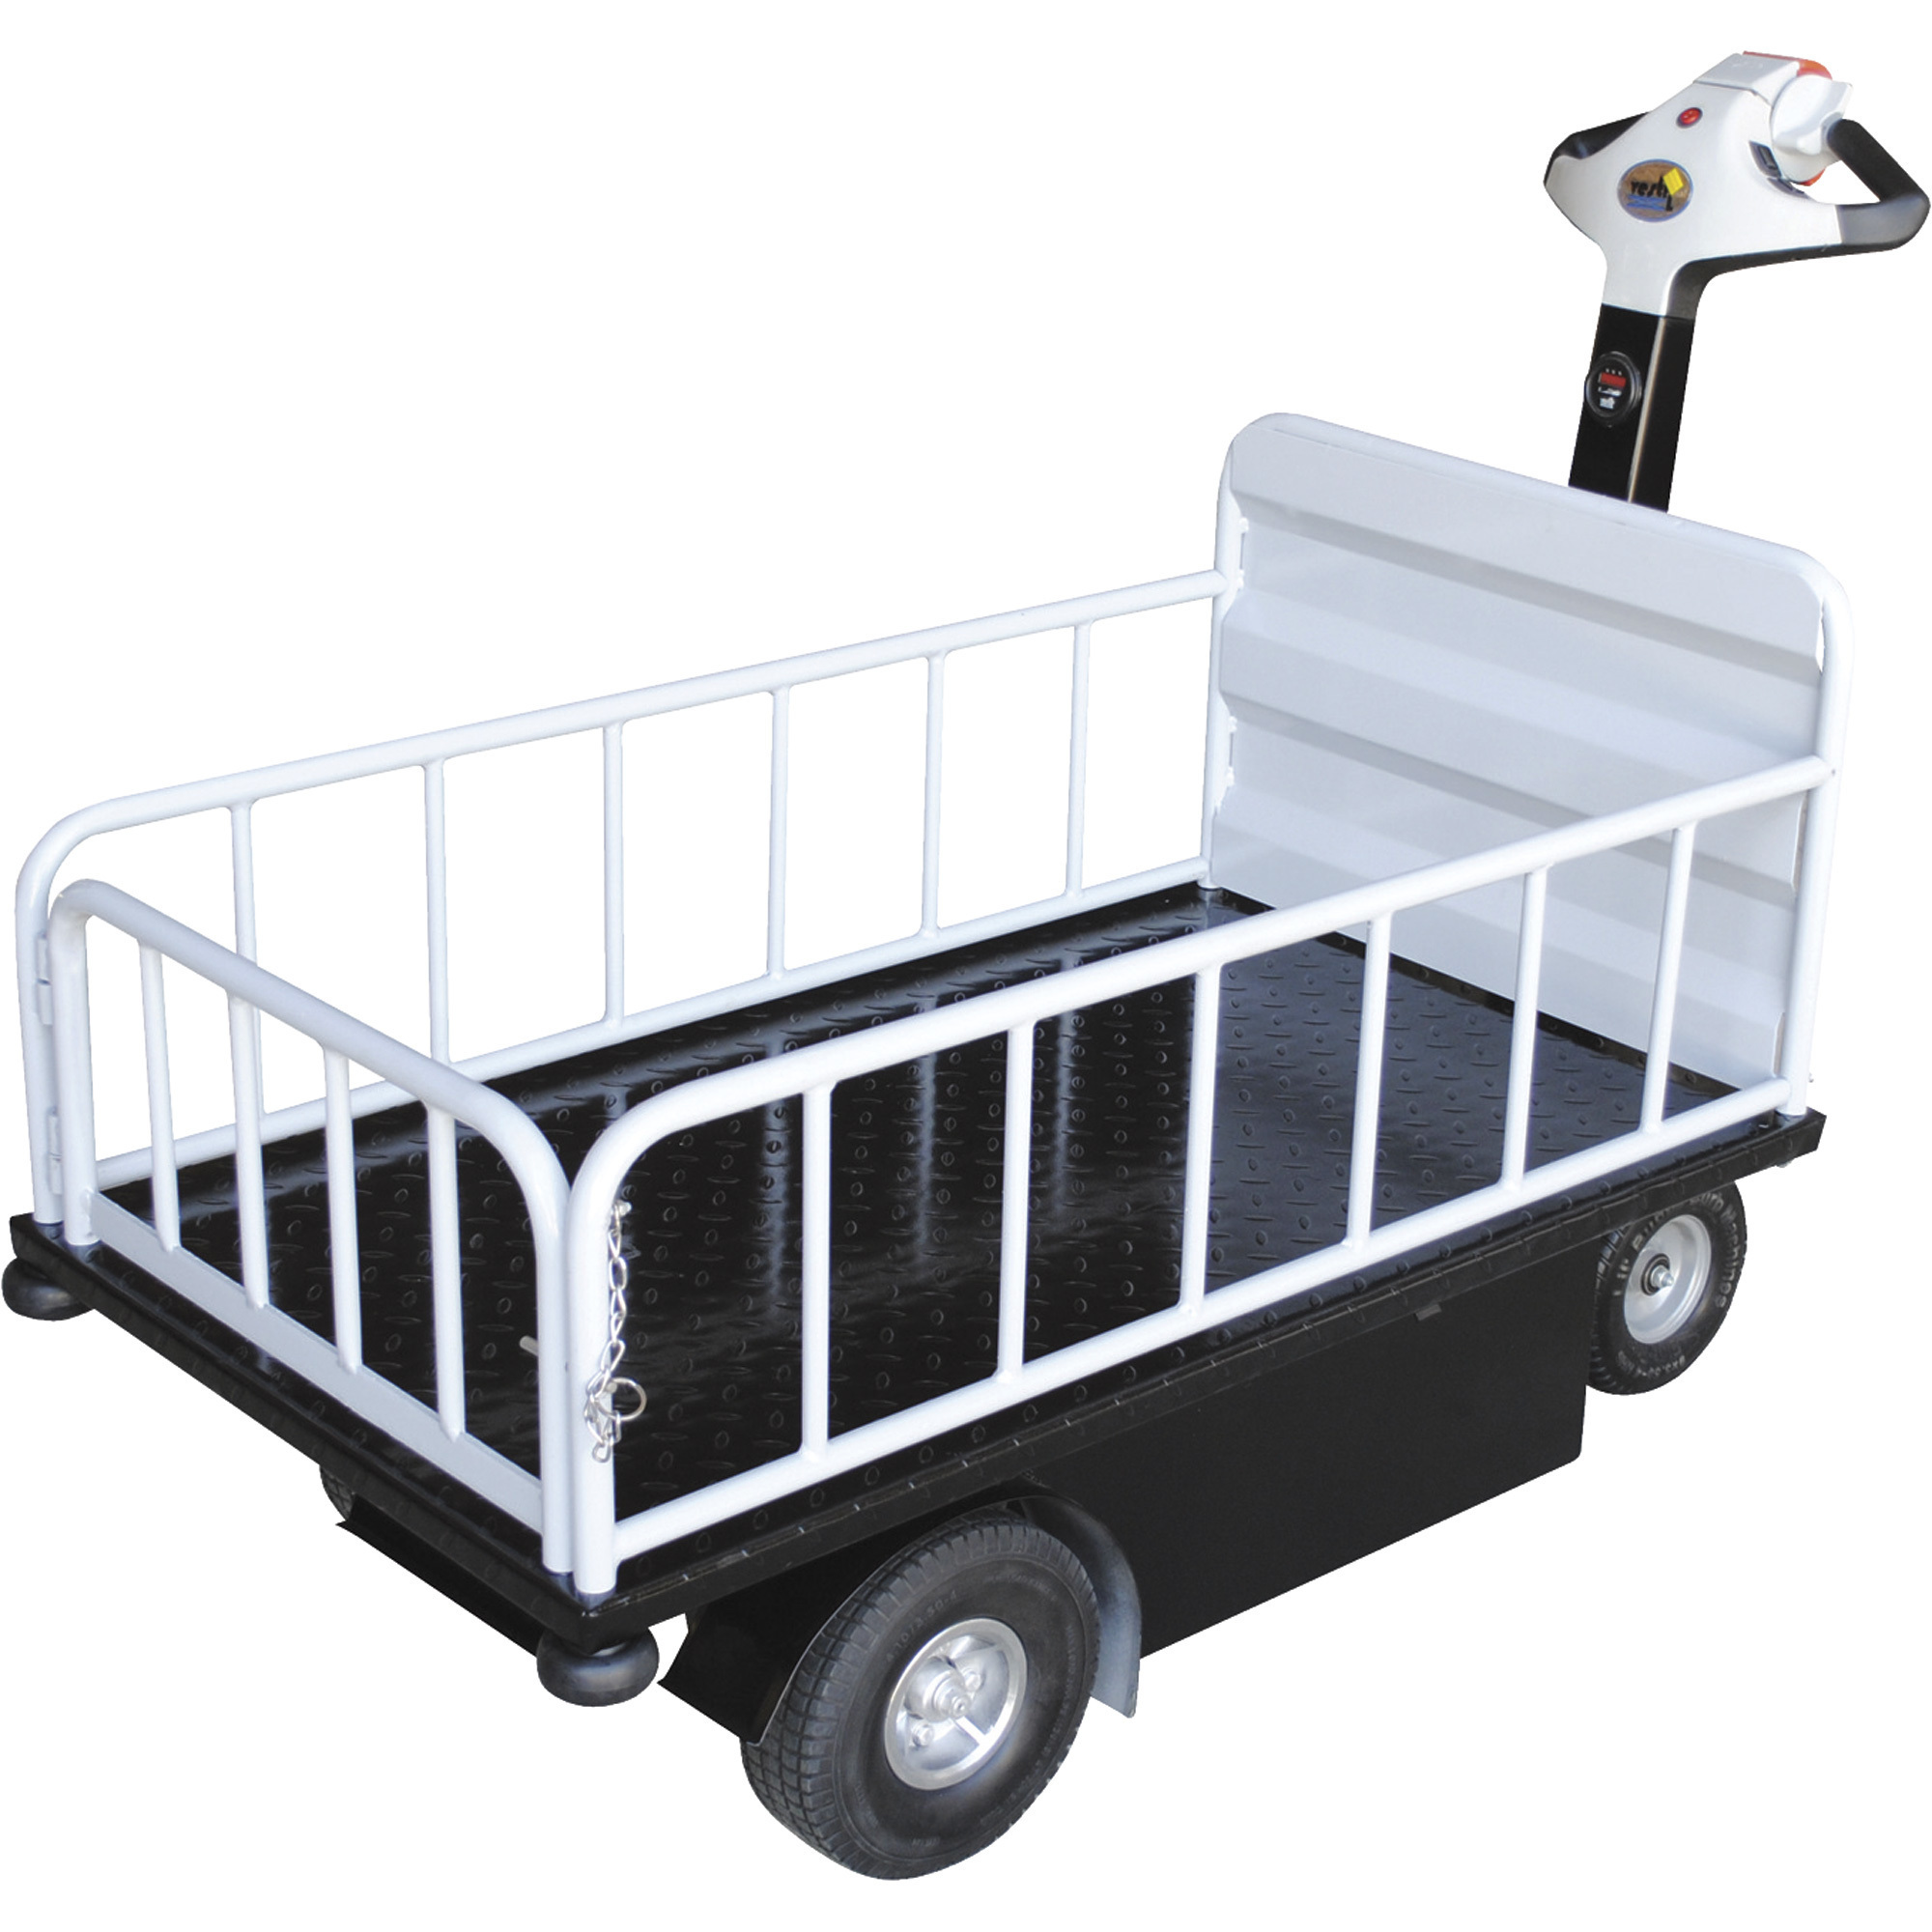 Vestil Traction-Drive Top Load Cart, 750-Lb. Capacity, Model NE-CART-2